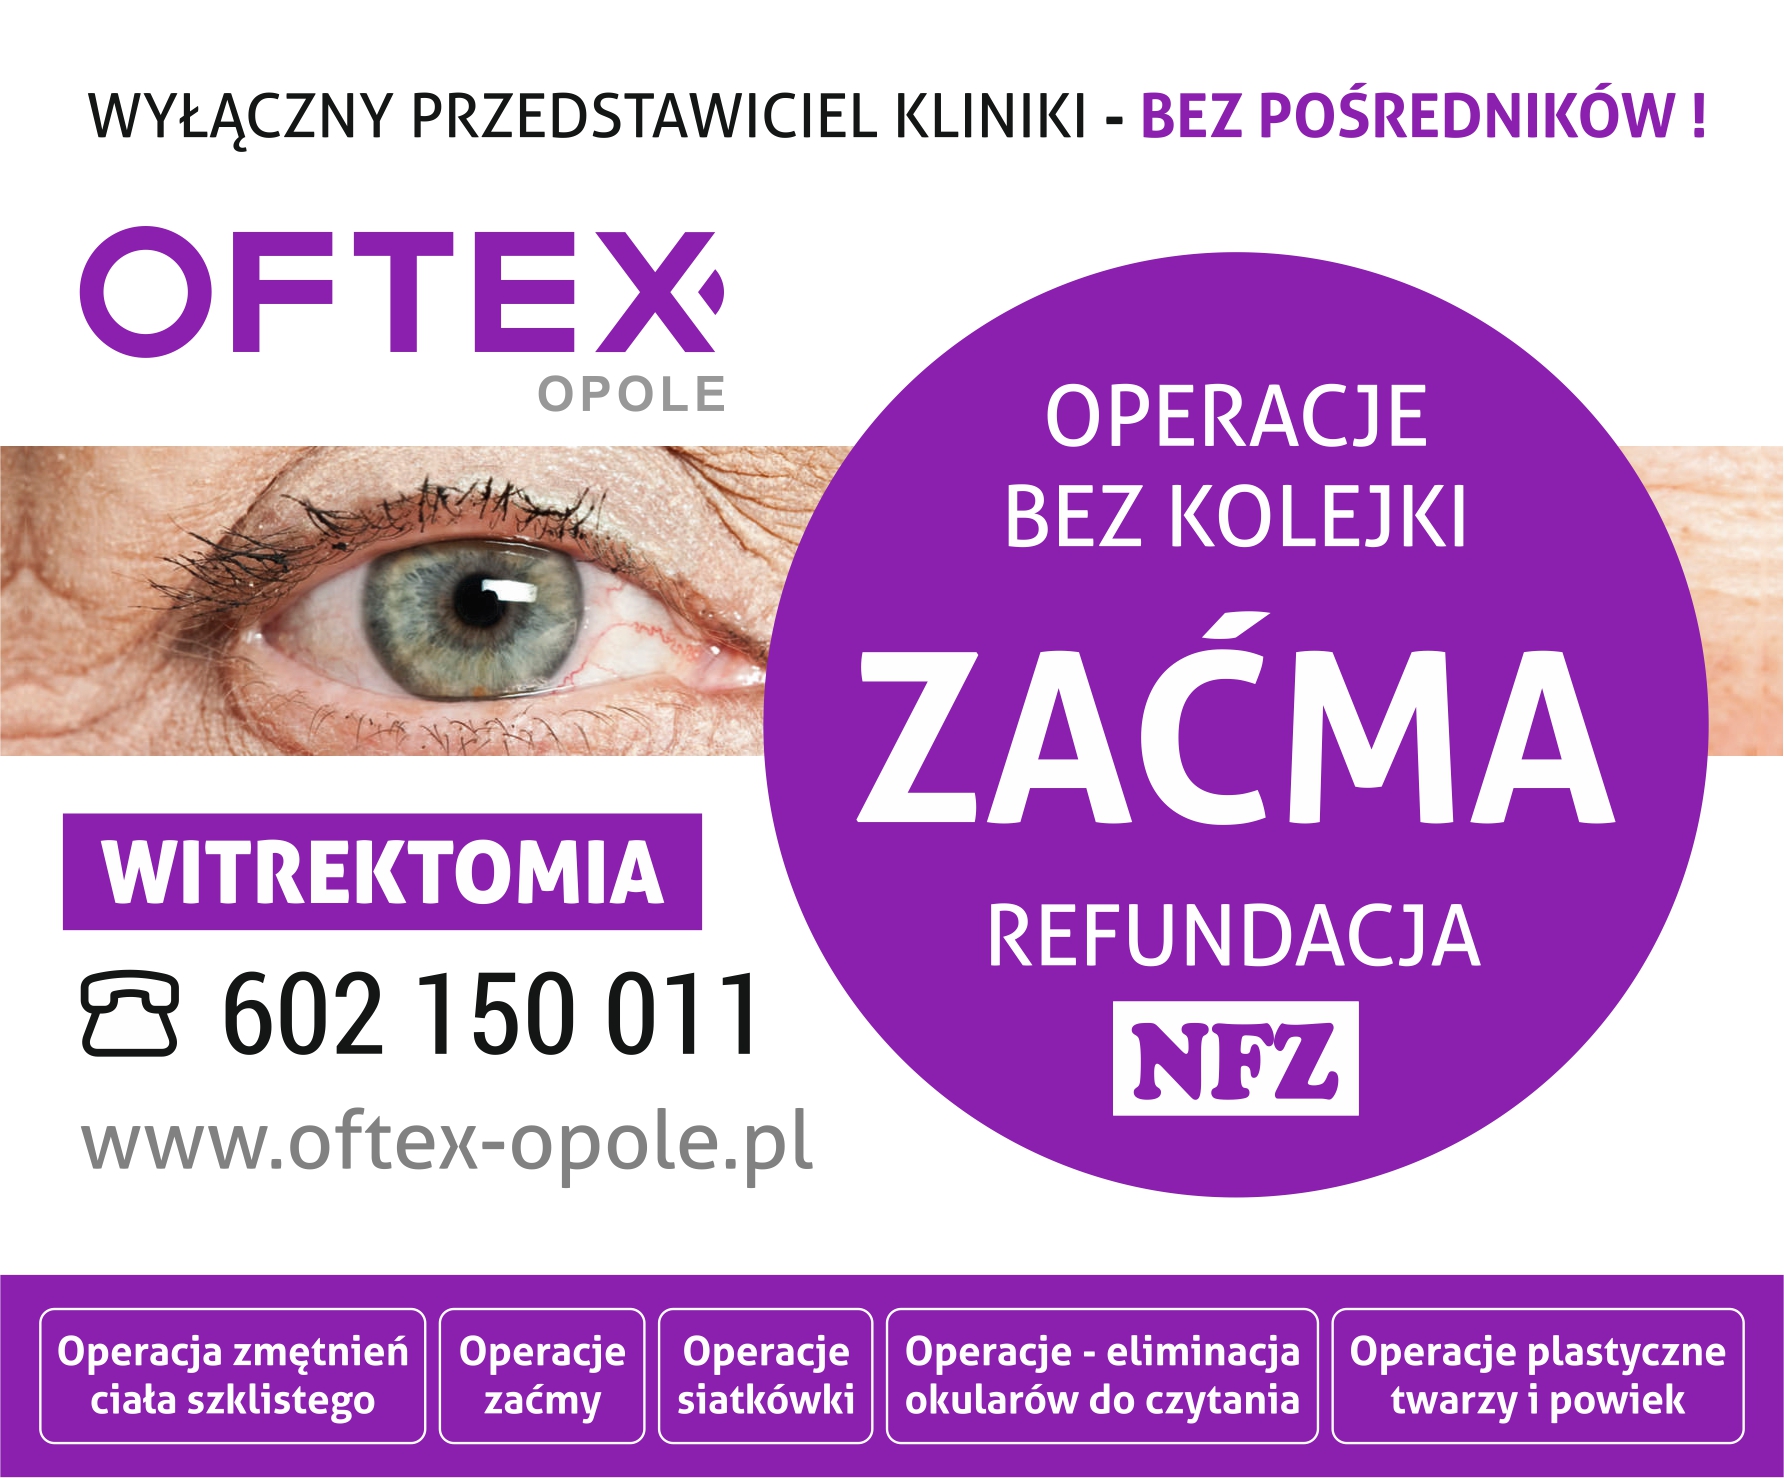 OFTEX POLSKA